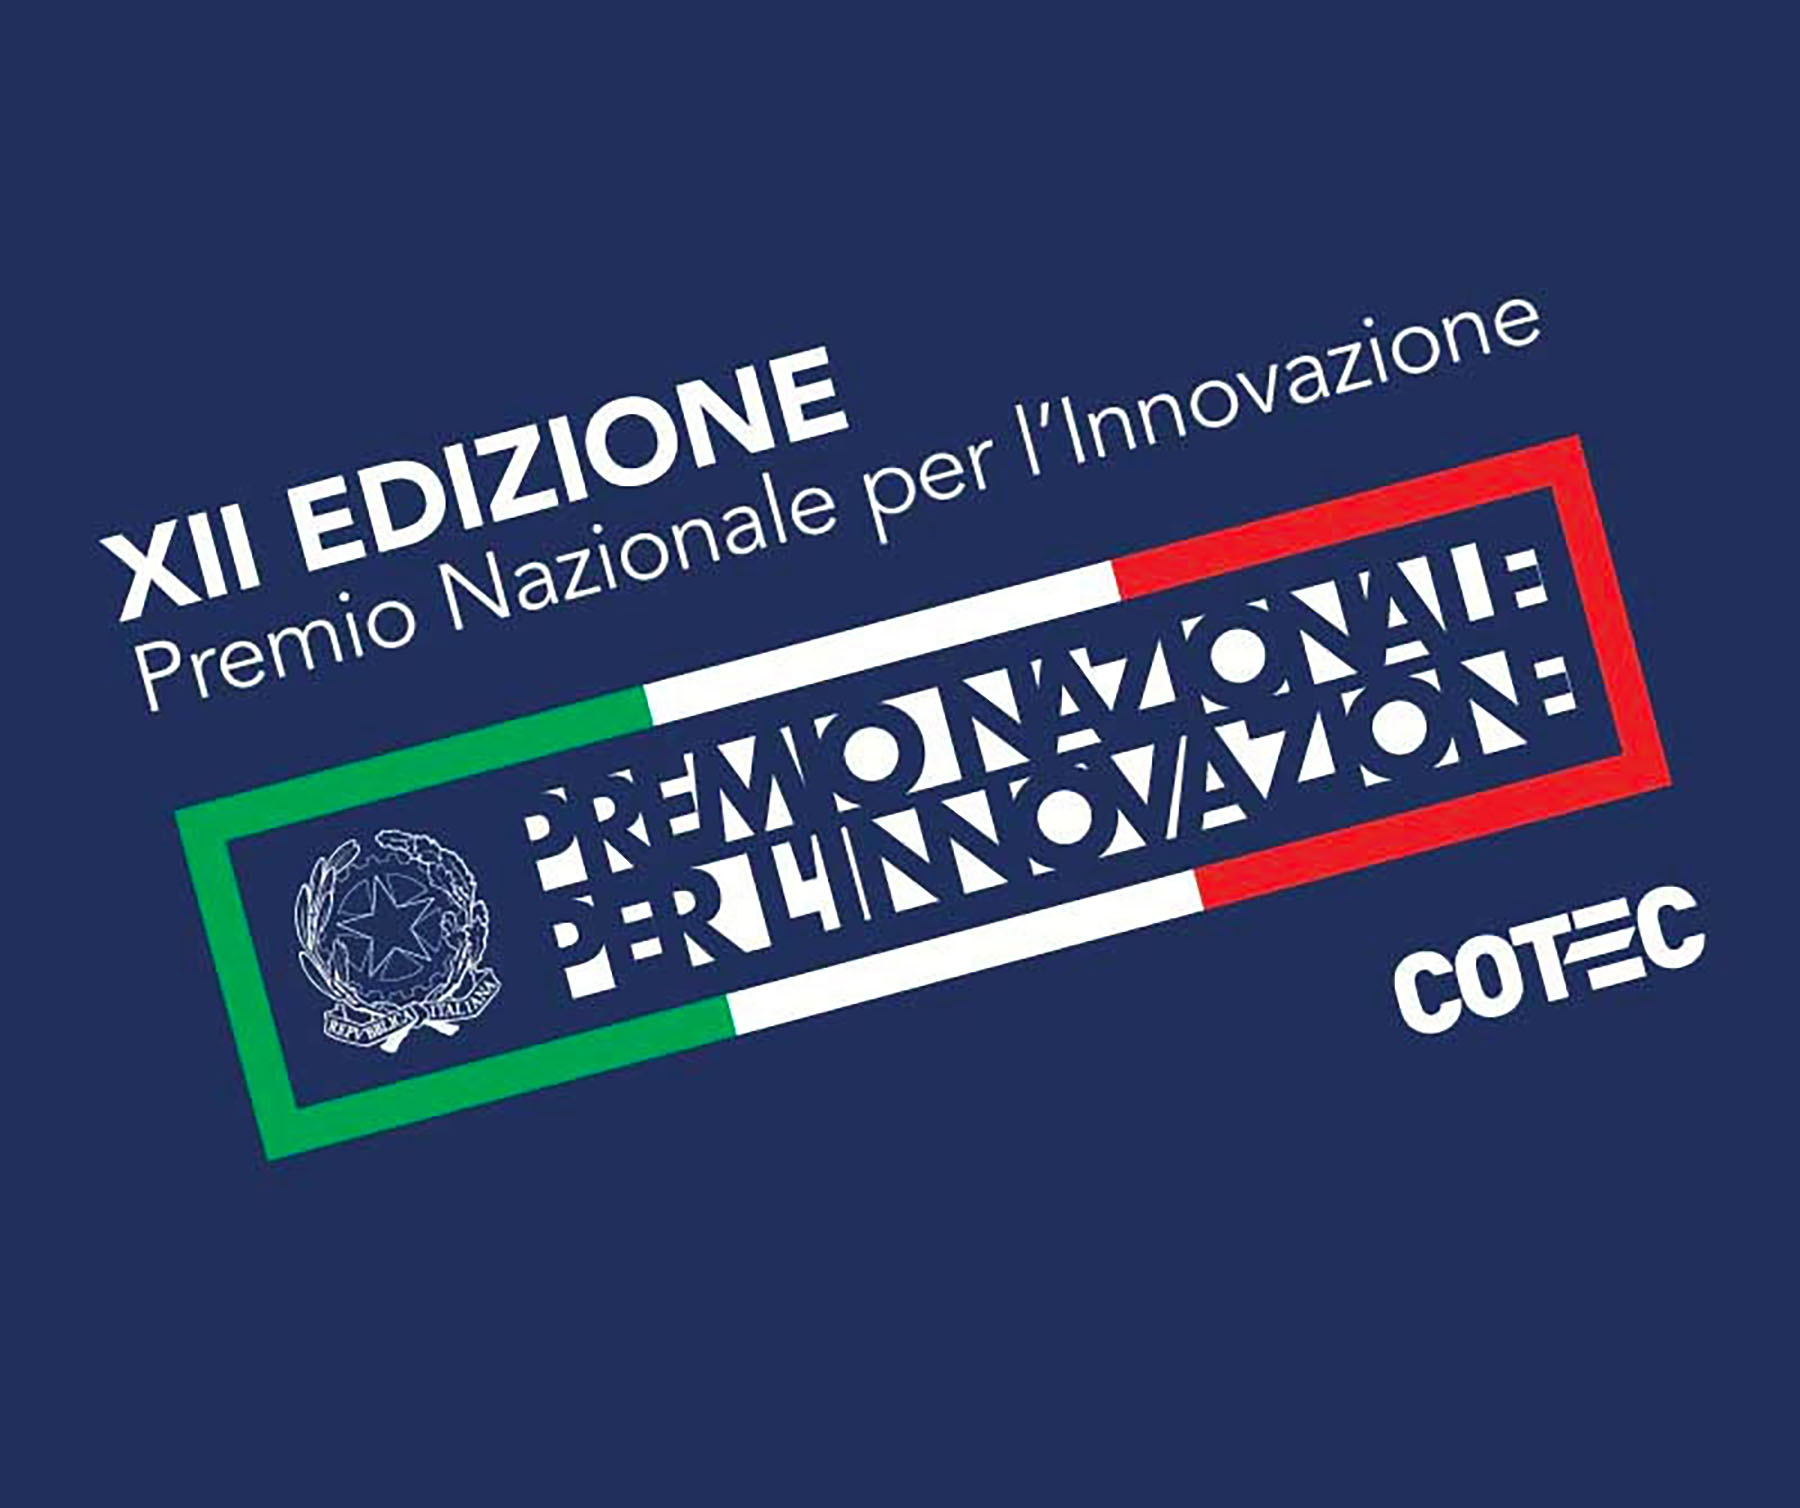 Innovation national award "Prize of Prizes" 2022